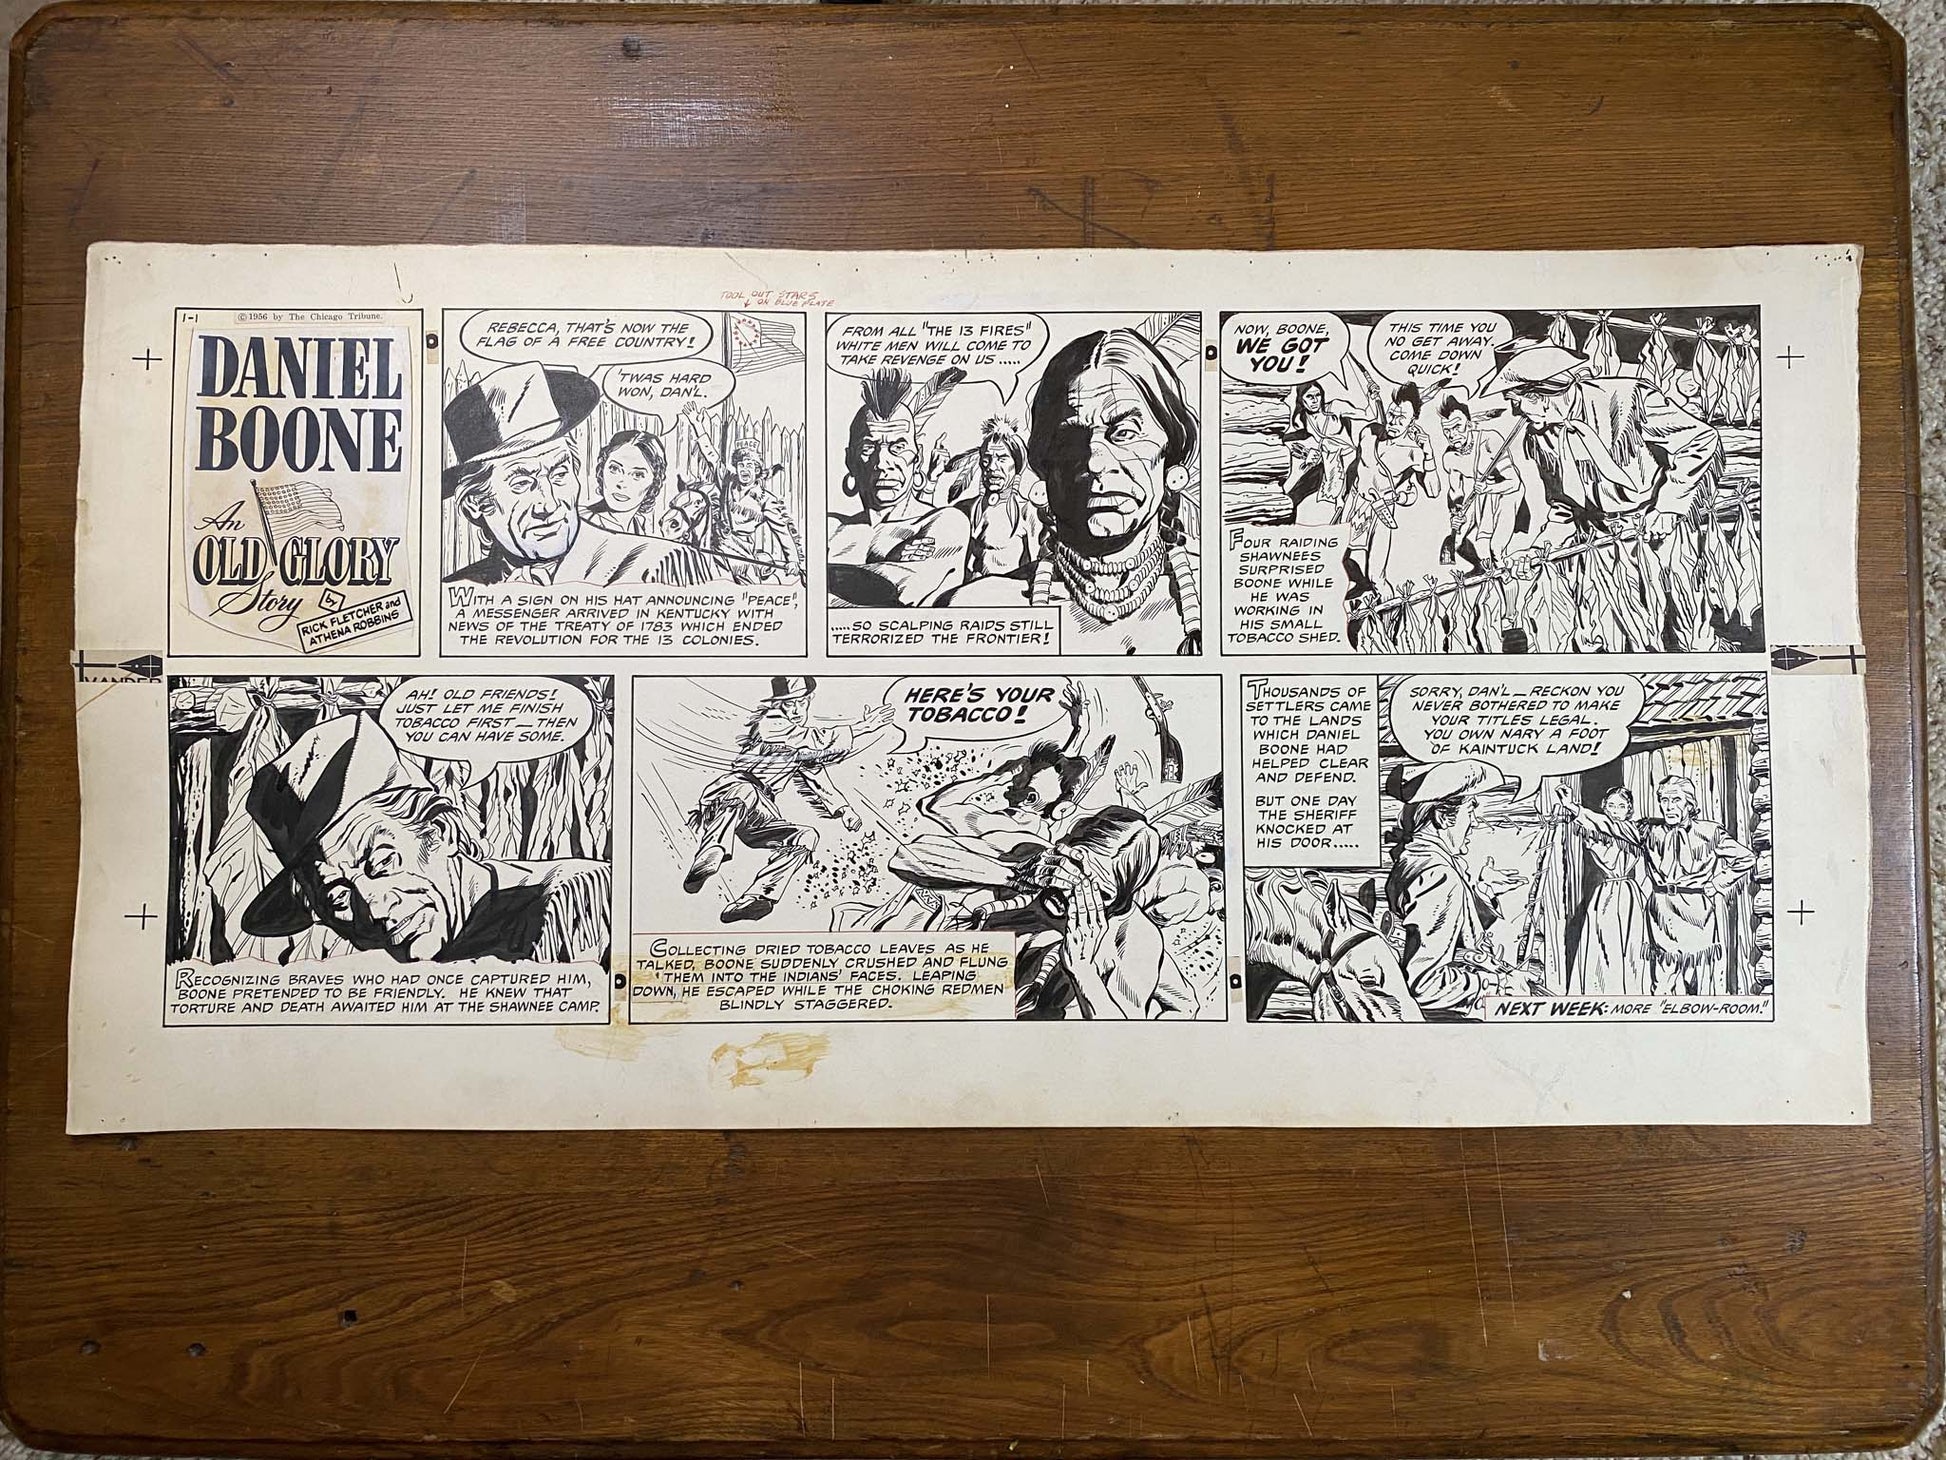 Daniel Boone: An Old Glory Story 1/1/56 Original Art Illustration | Fletcher Studio